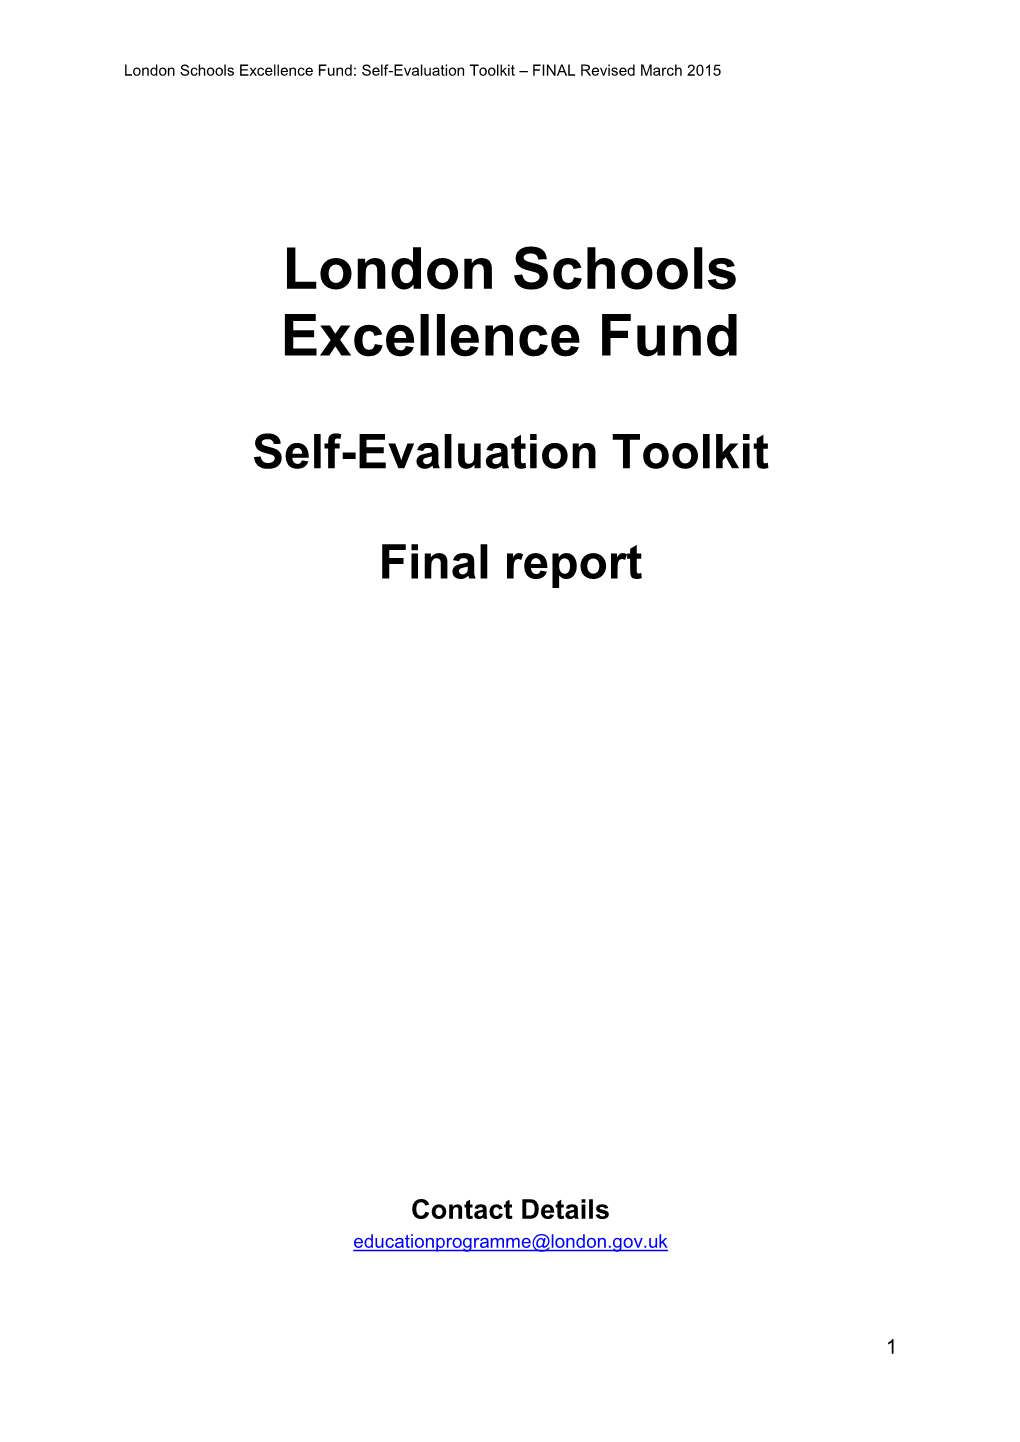 London Schools Evaluation Fund